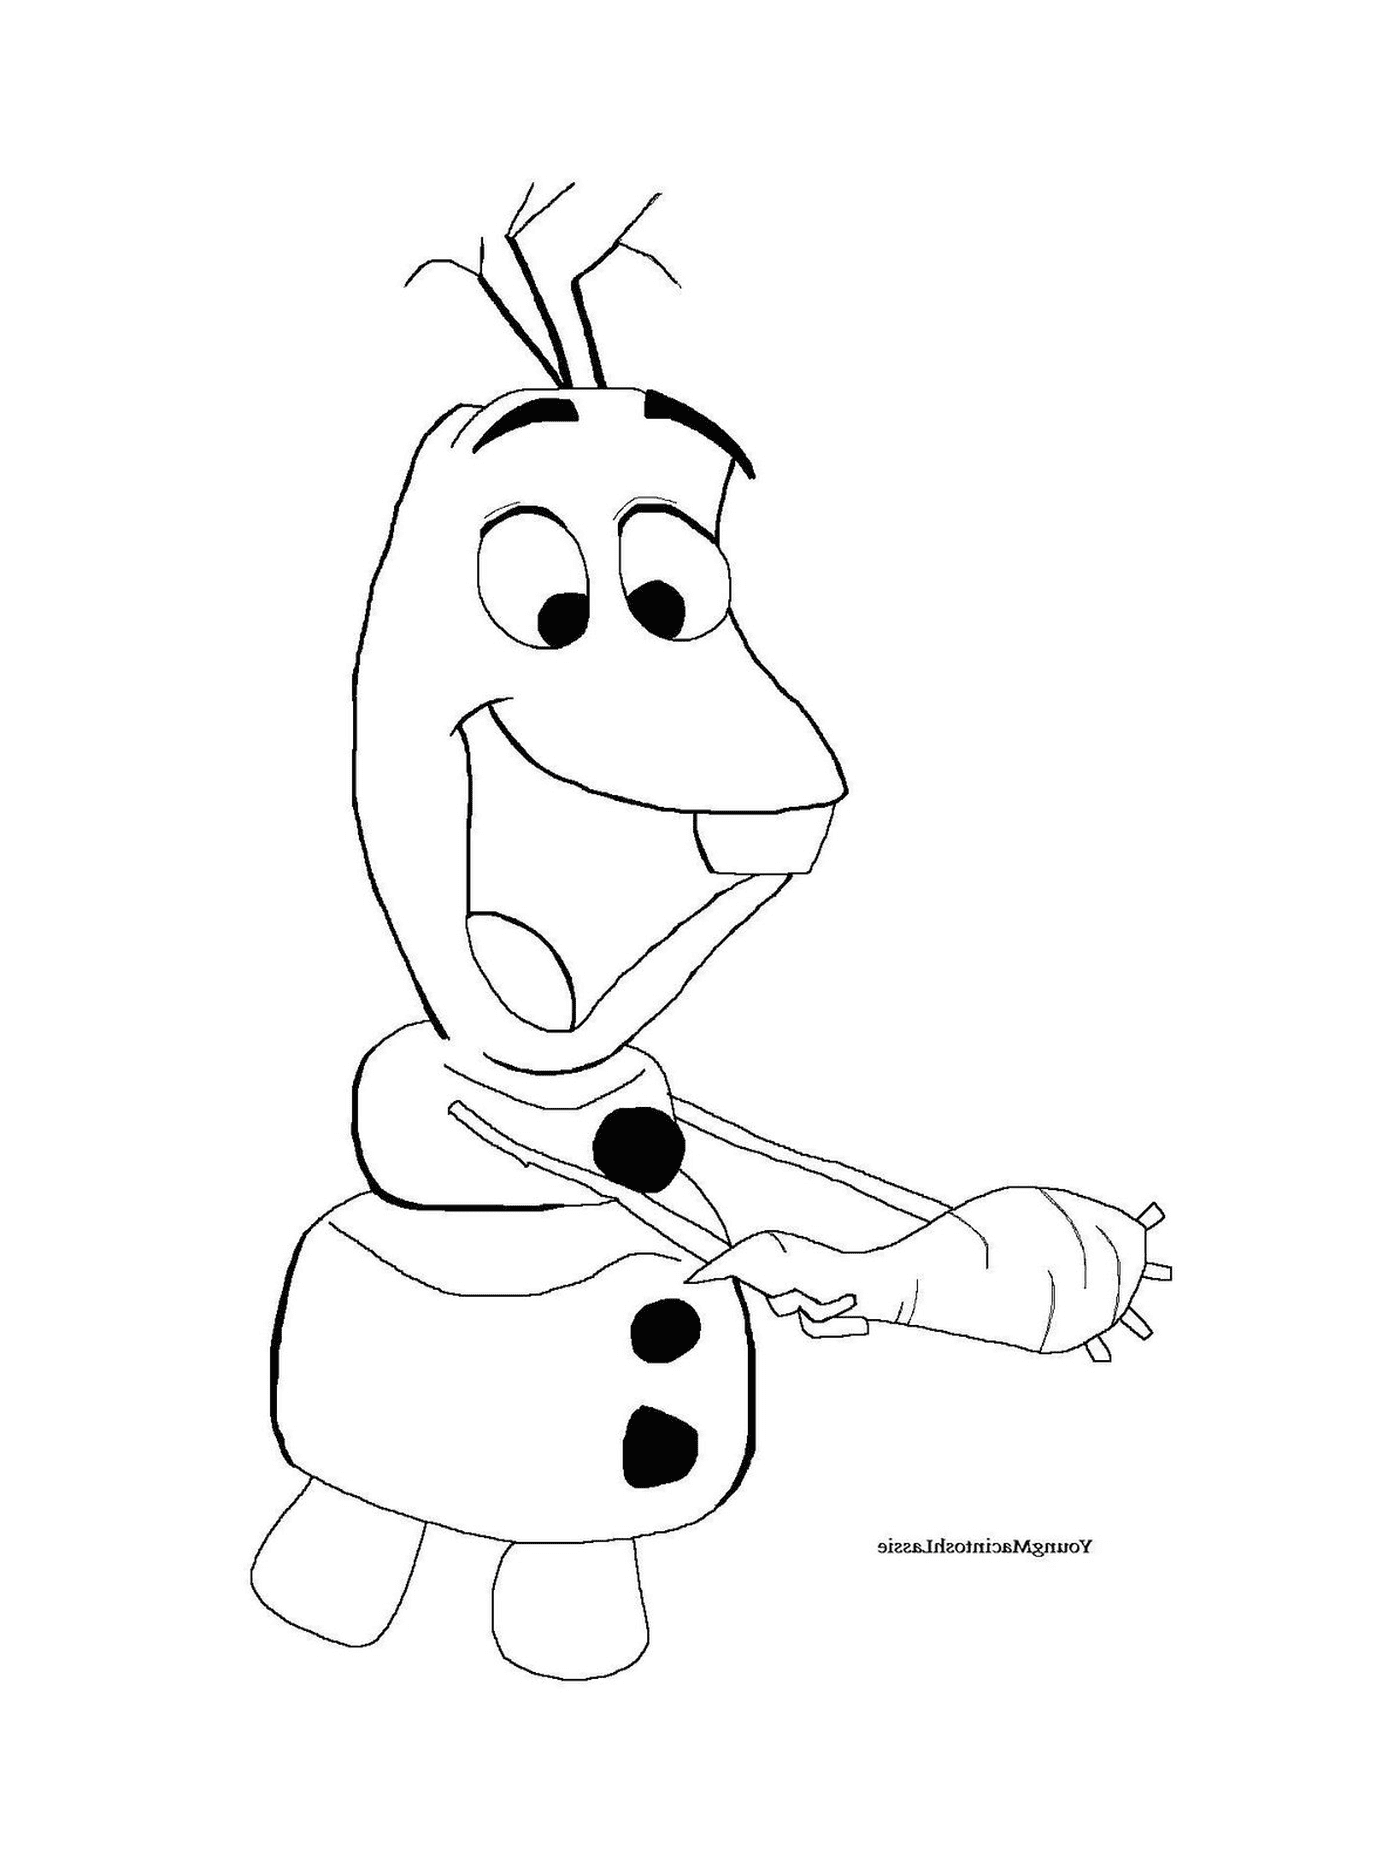   Olaf sans nez 